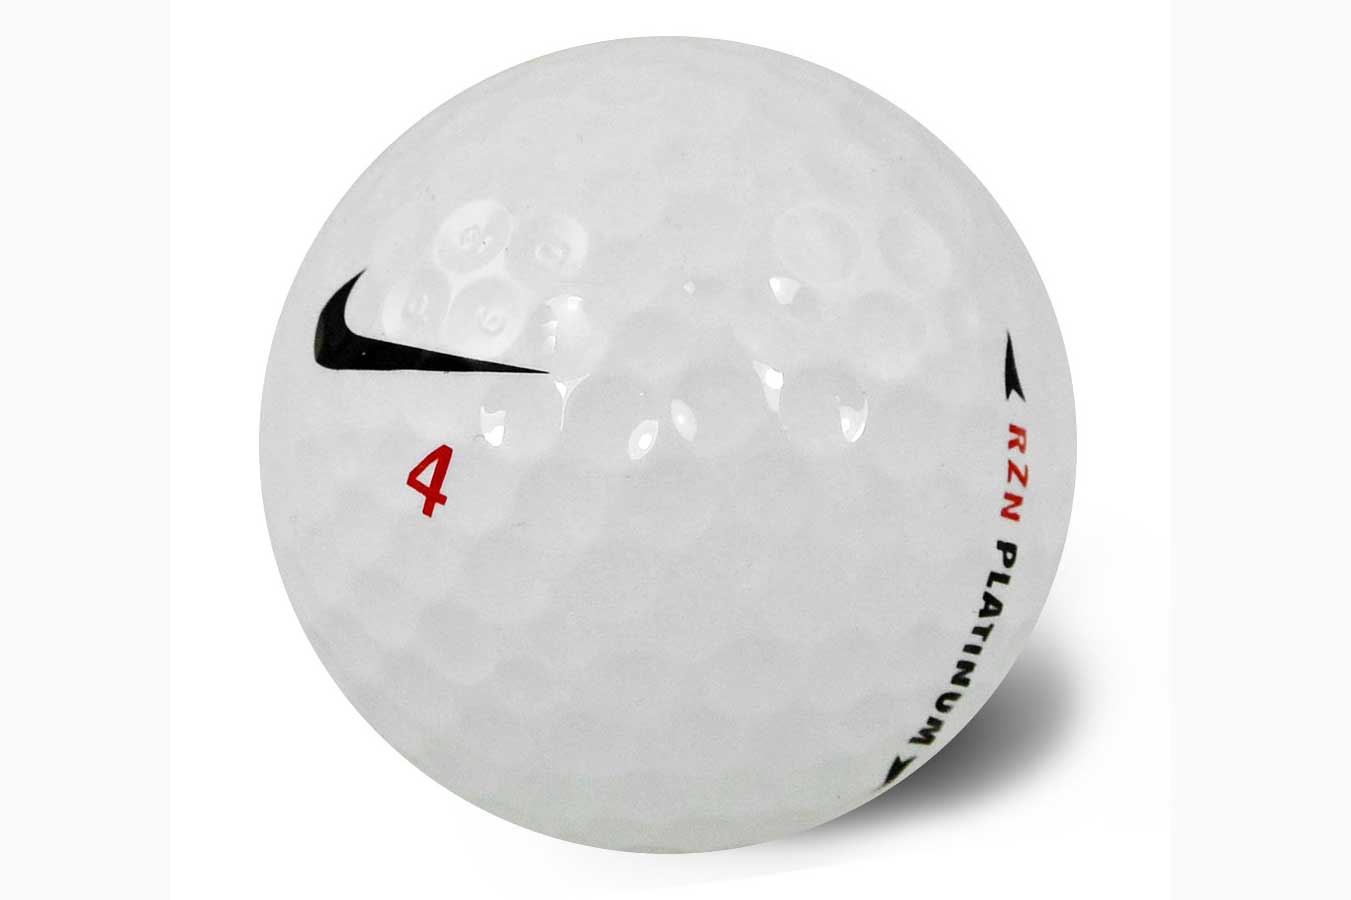 Nike ball | GolfMagic